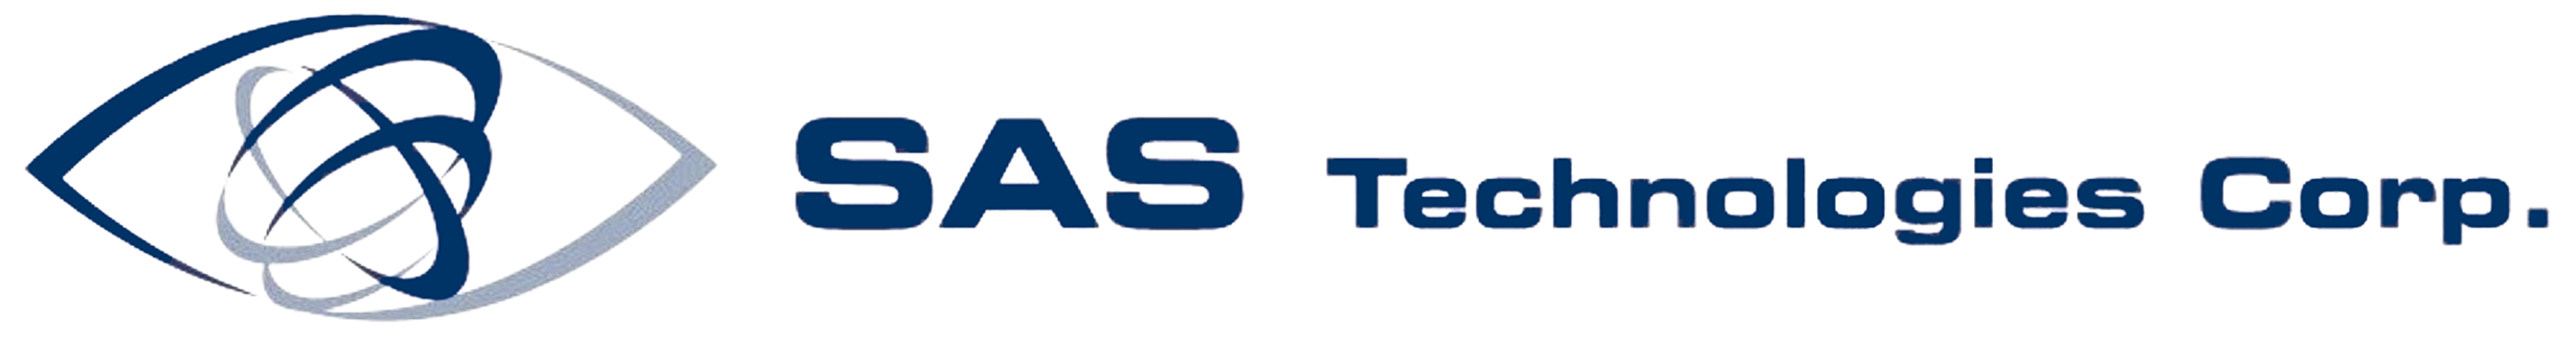 SAS Technologies Corp.